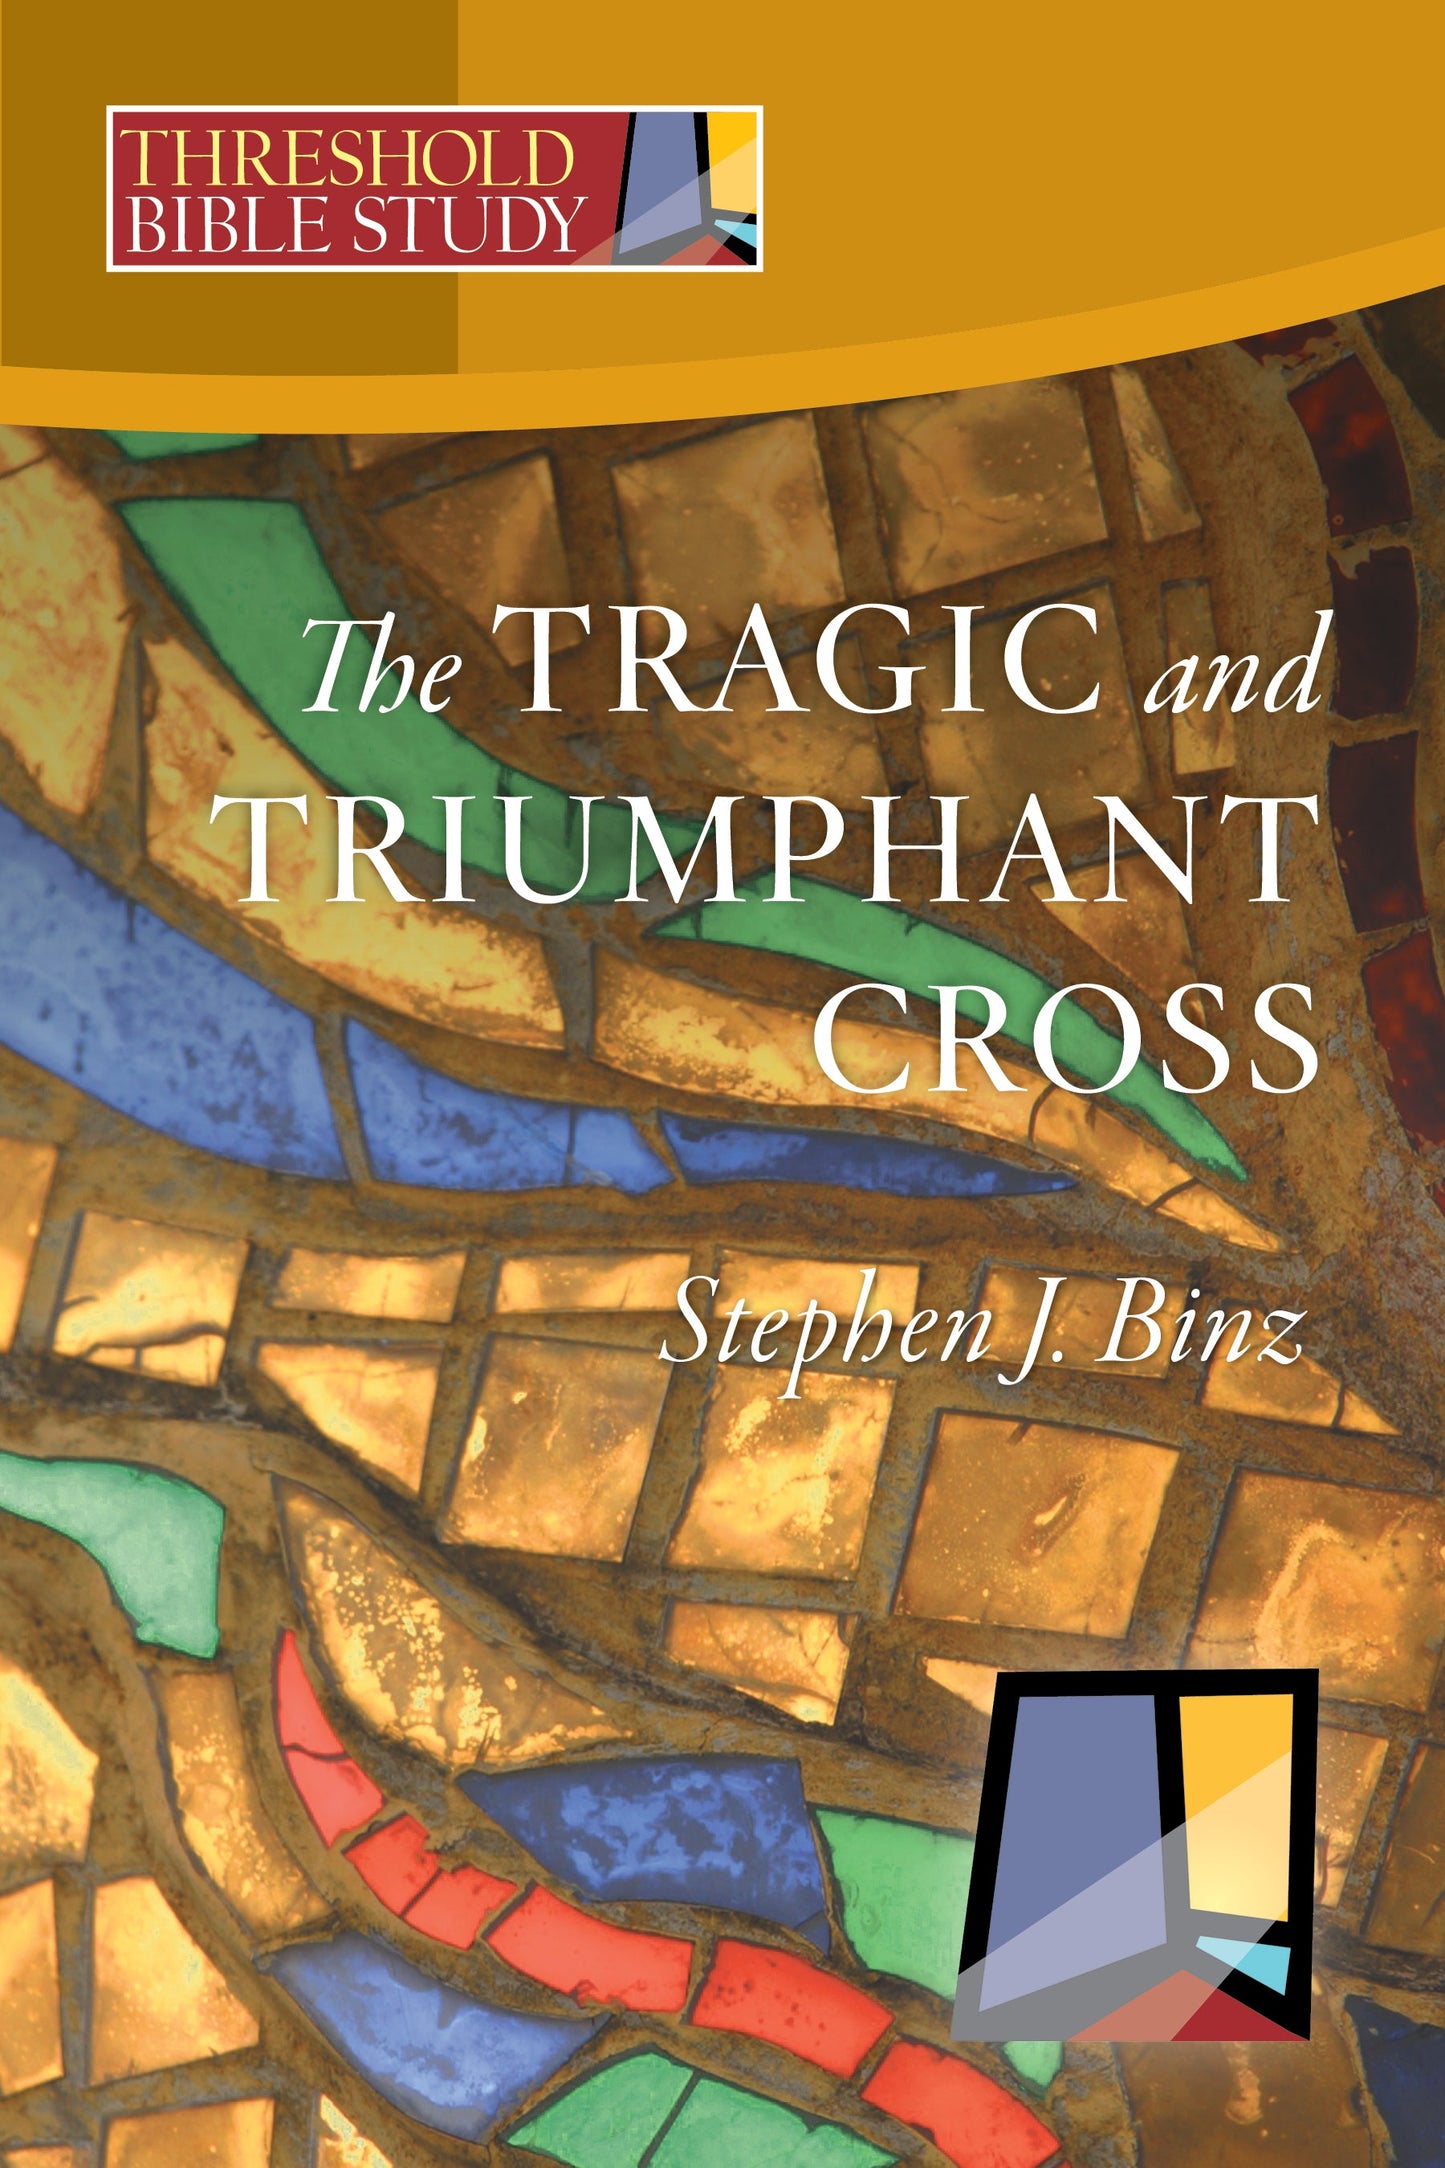 The Tragic and Triumphant Cross